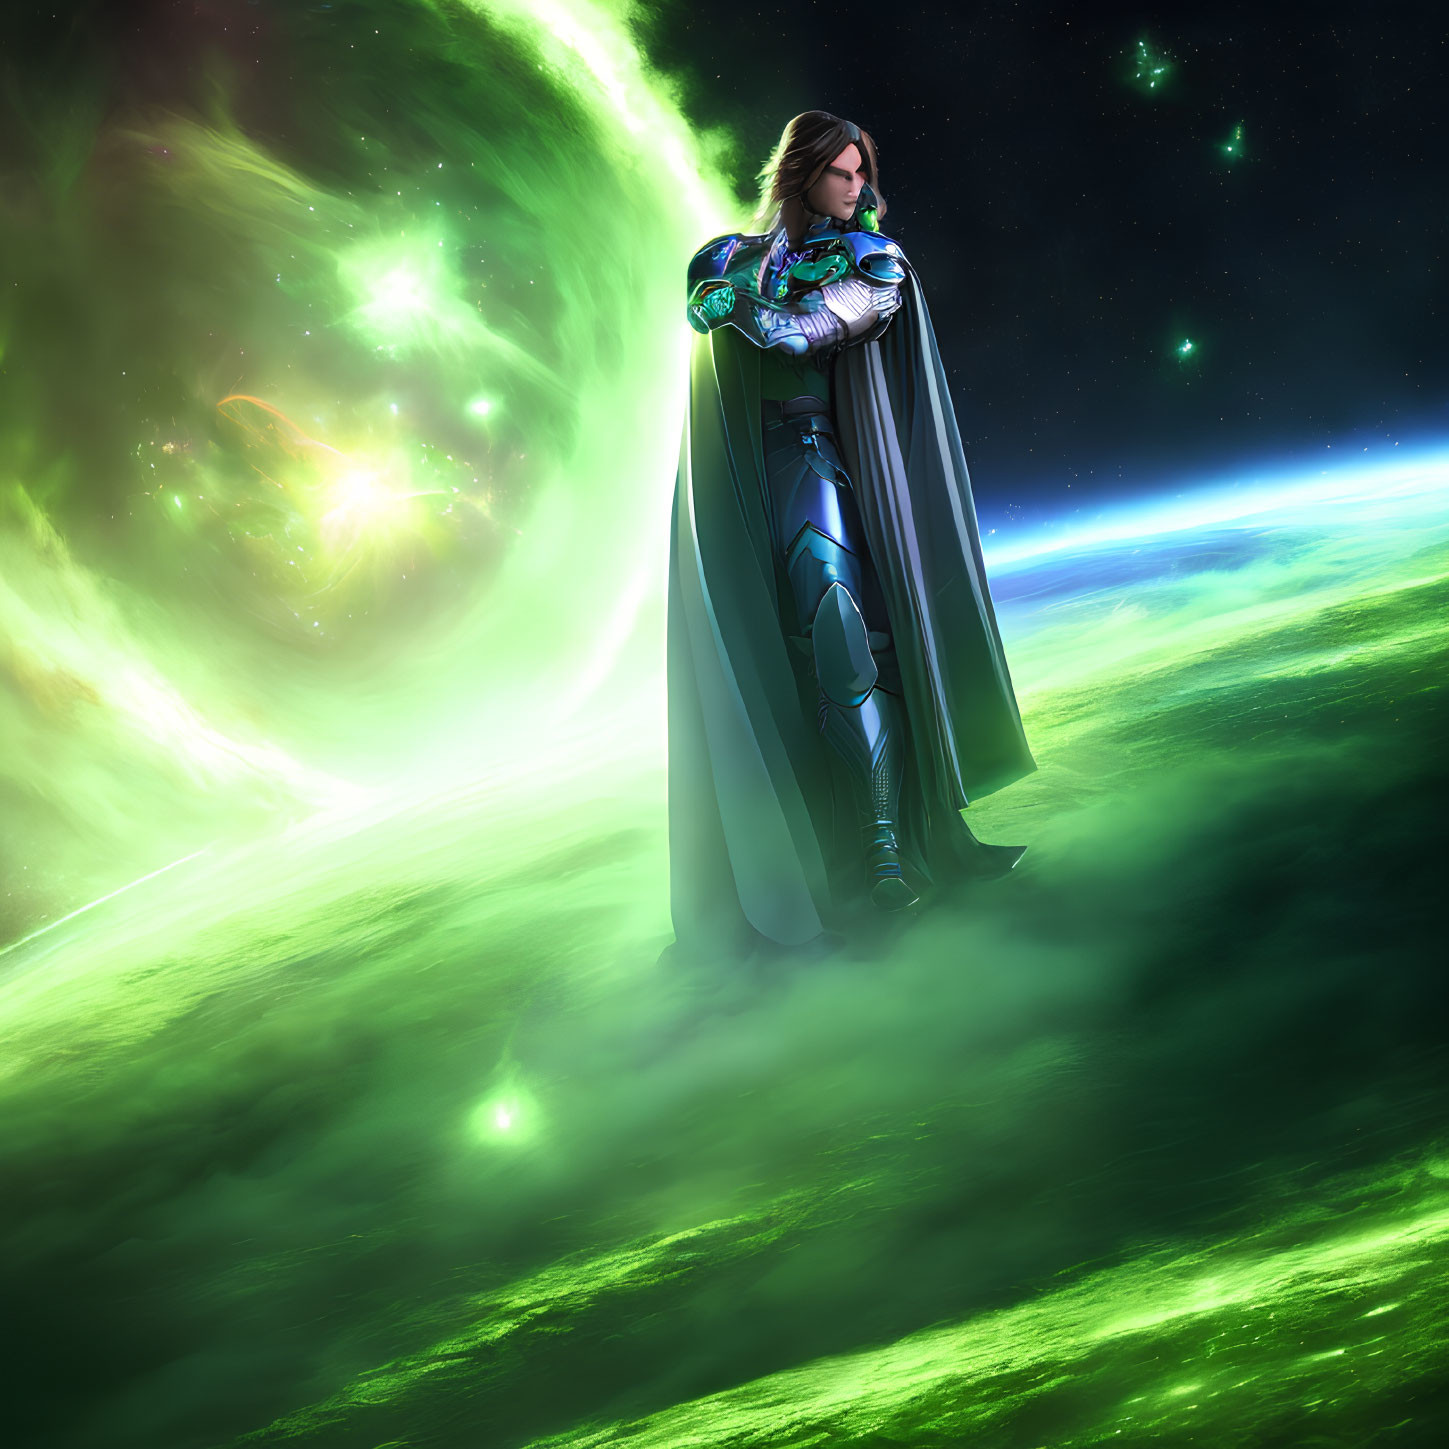 Futuristic armored figure gazes at green nebula in space